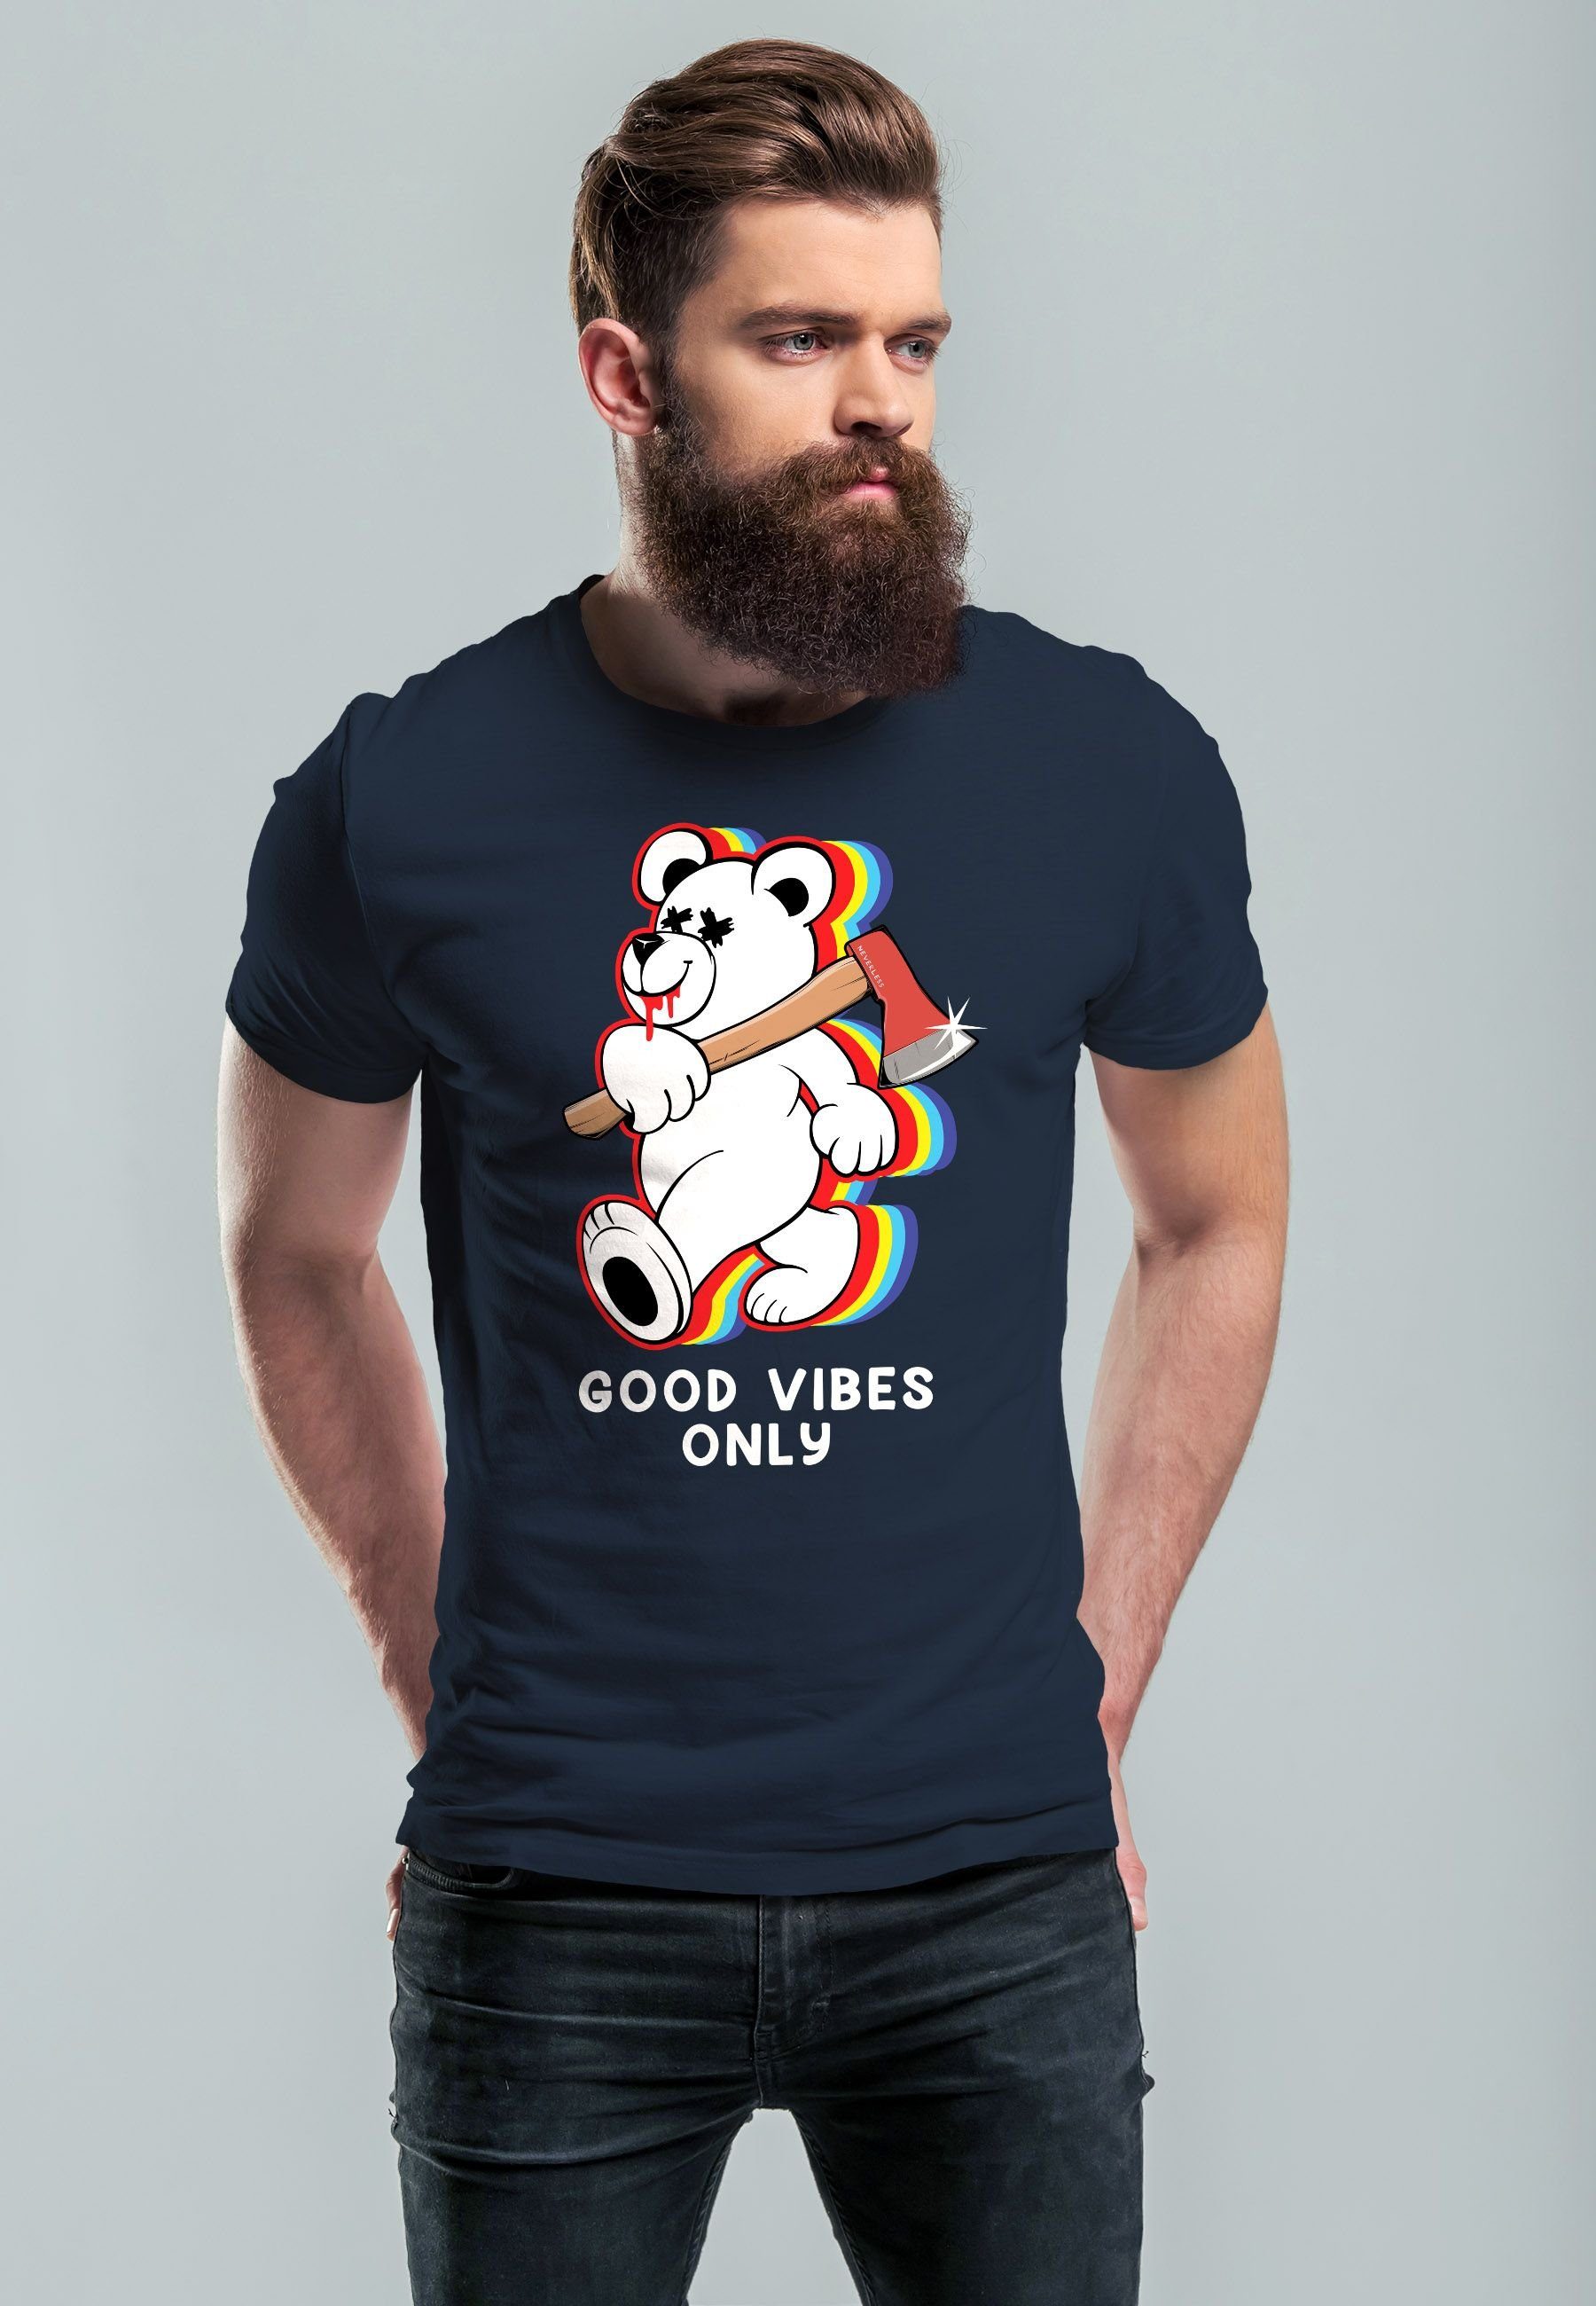 Neverless Print-Shirt Herren navy Axt Good Only Vibes Teddy Sarkasmus Print mit Fashi Bär Teachwear T-Shirt